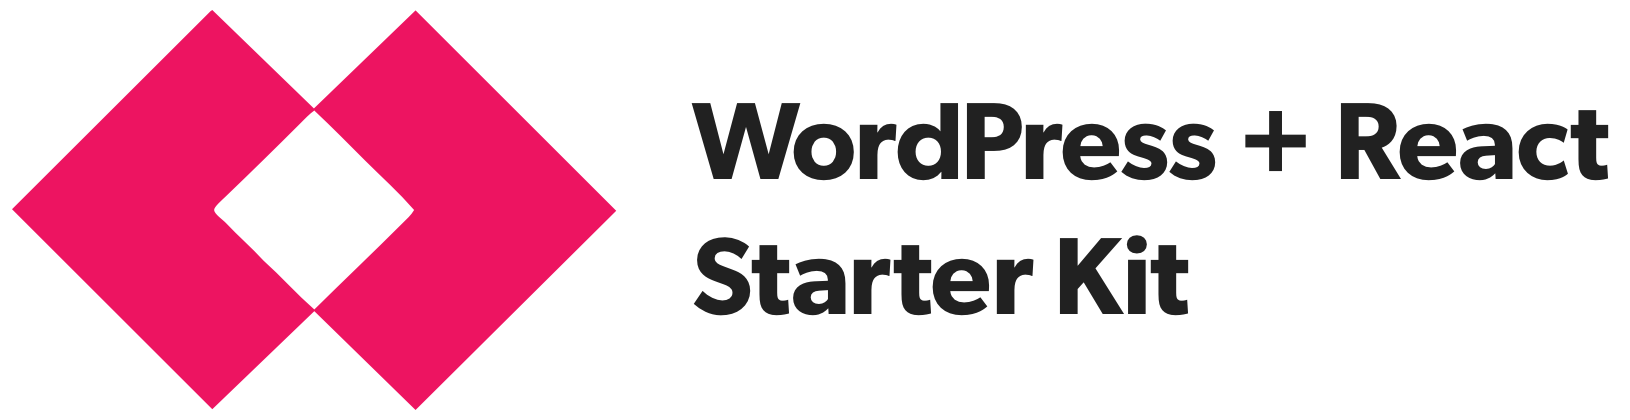 wordpress-plus-react-header.png